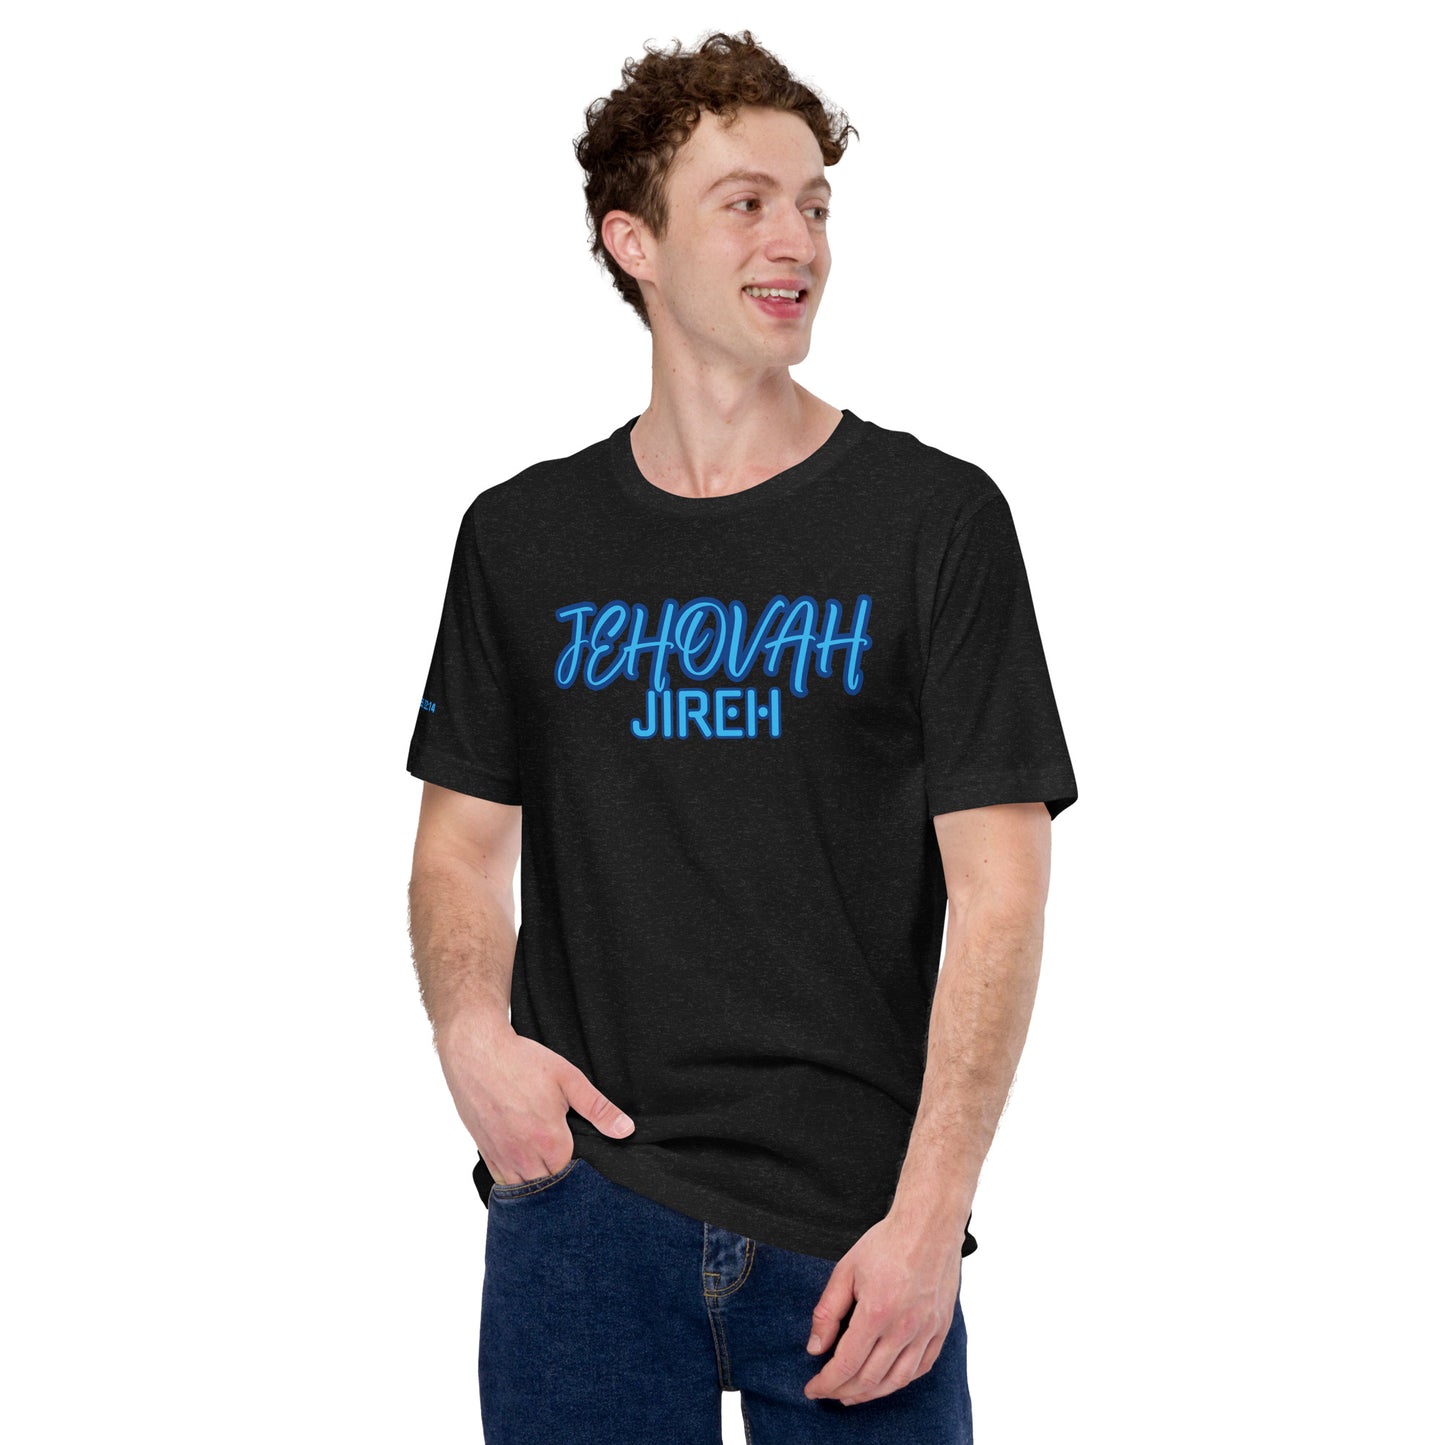 JEHOVAH JIREH- Unisex t-shirt